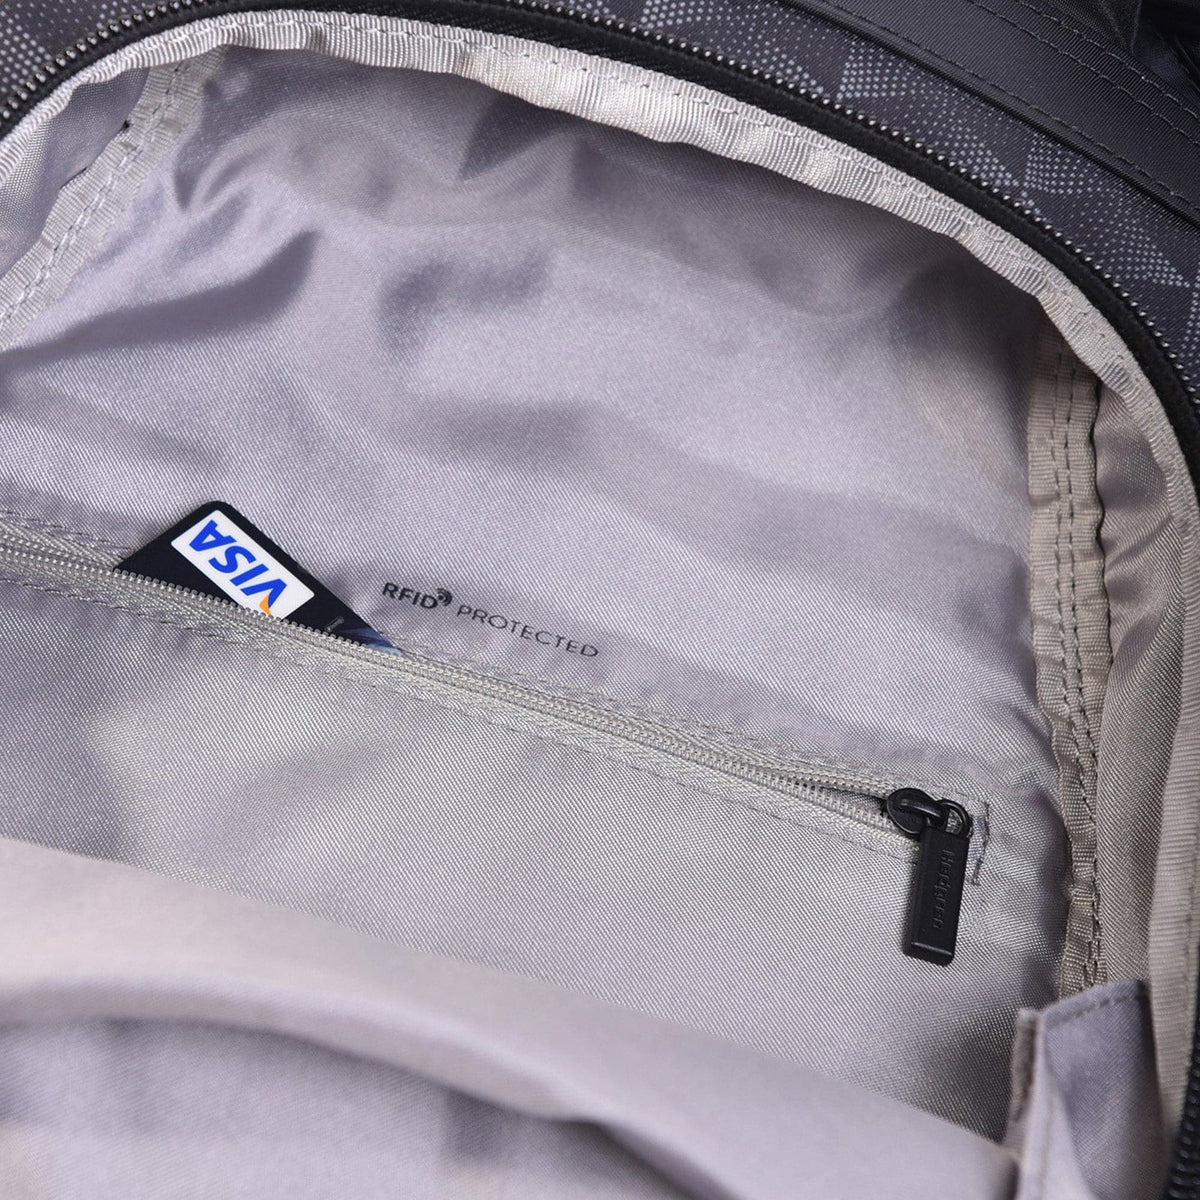 Hedgren Vogue RFID Small Backpack